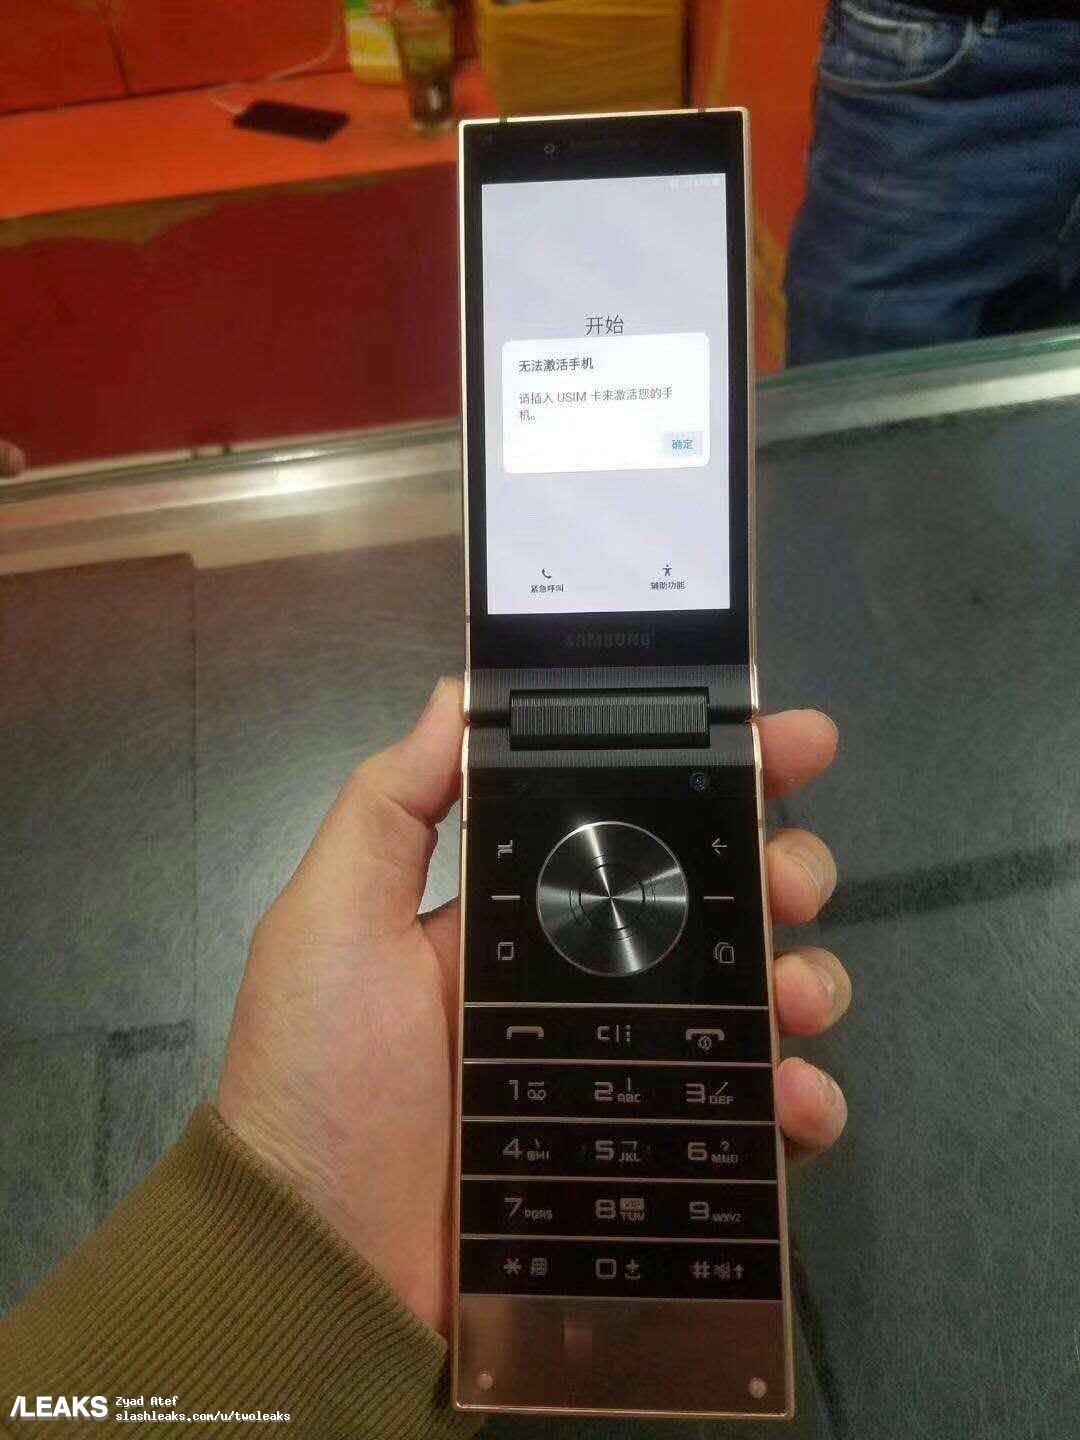 Samsung W2019 leaked photos